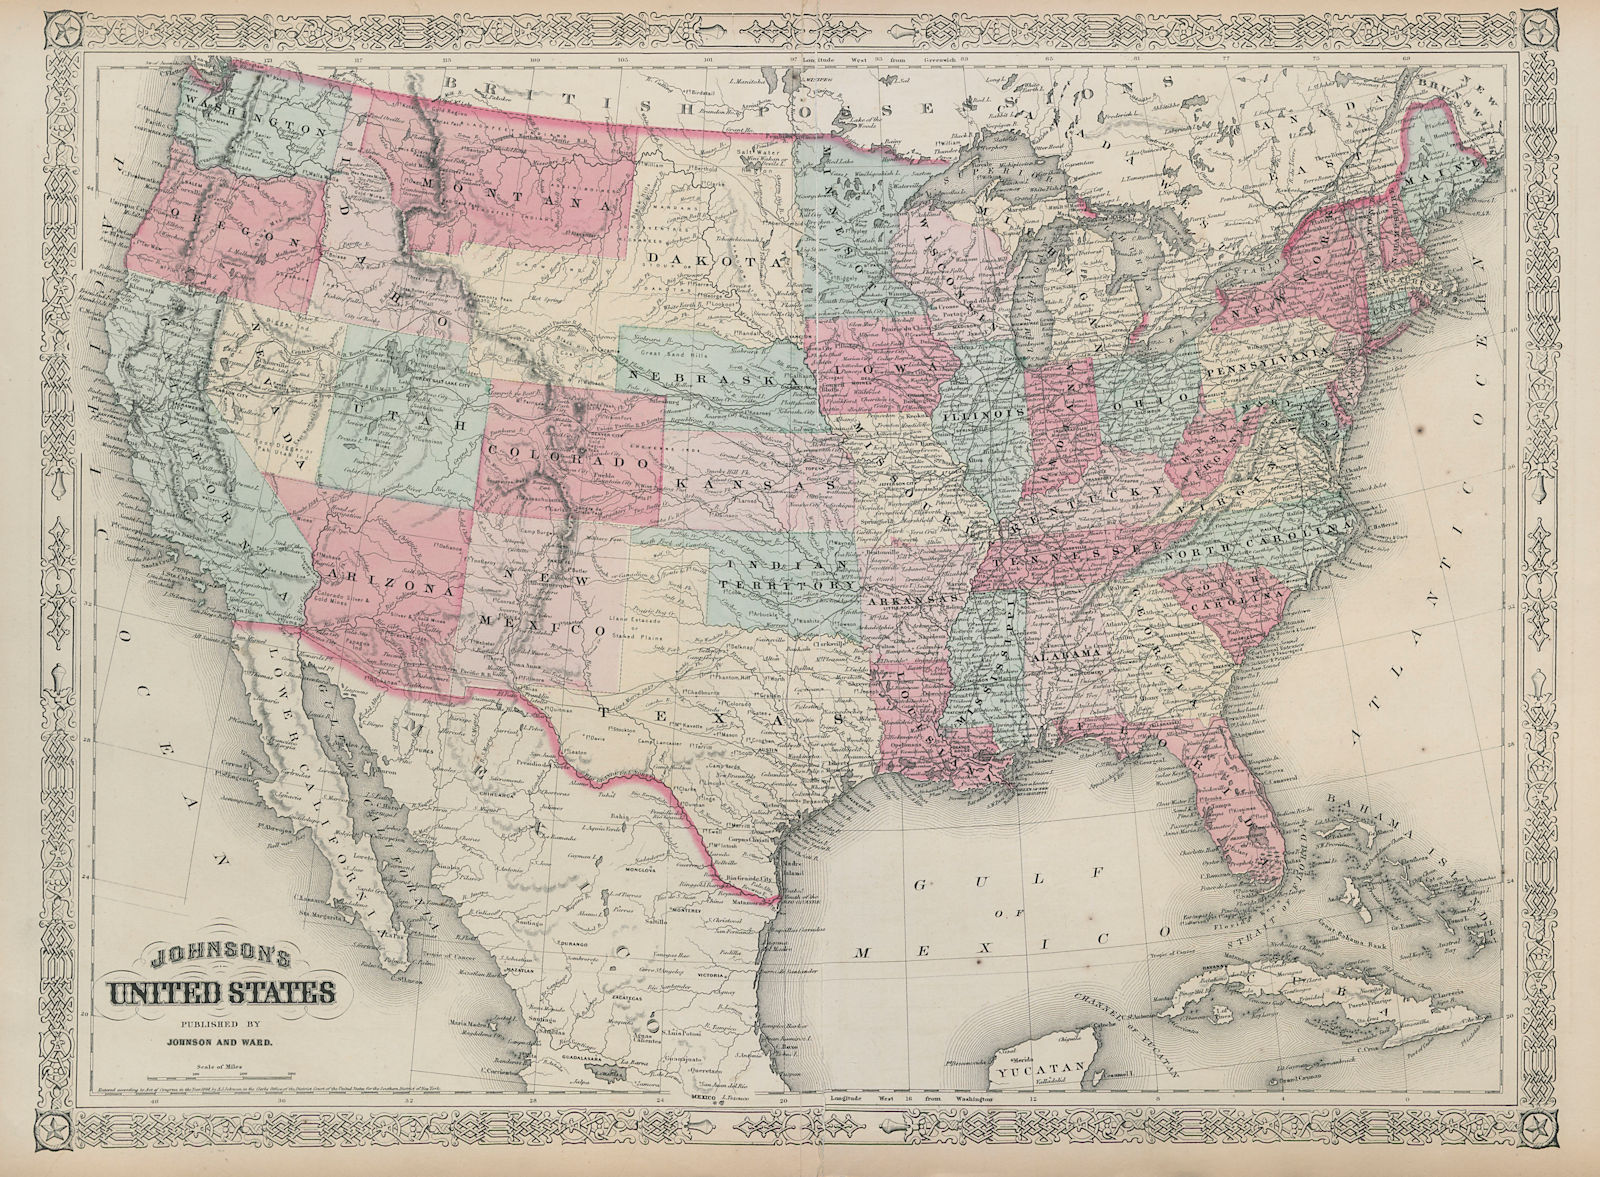 Johnson's United States. Wyoming part of Dakota Territory 1865 old antique map